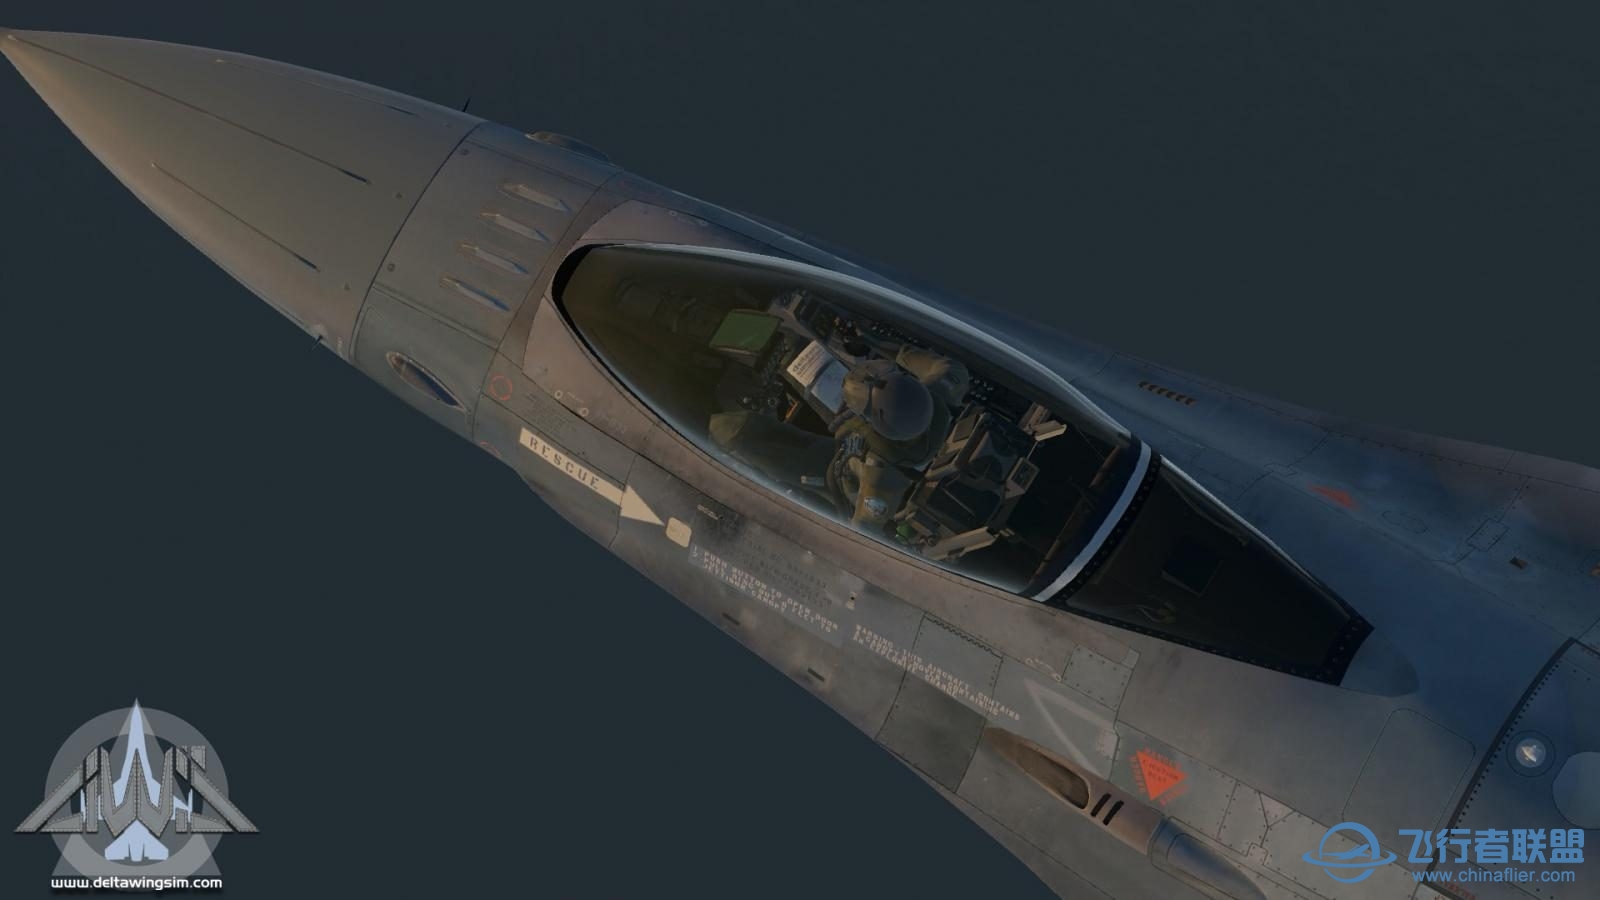 DeltaWing Simulations 发布 F-16C XPL-7924 